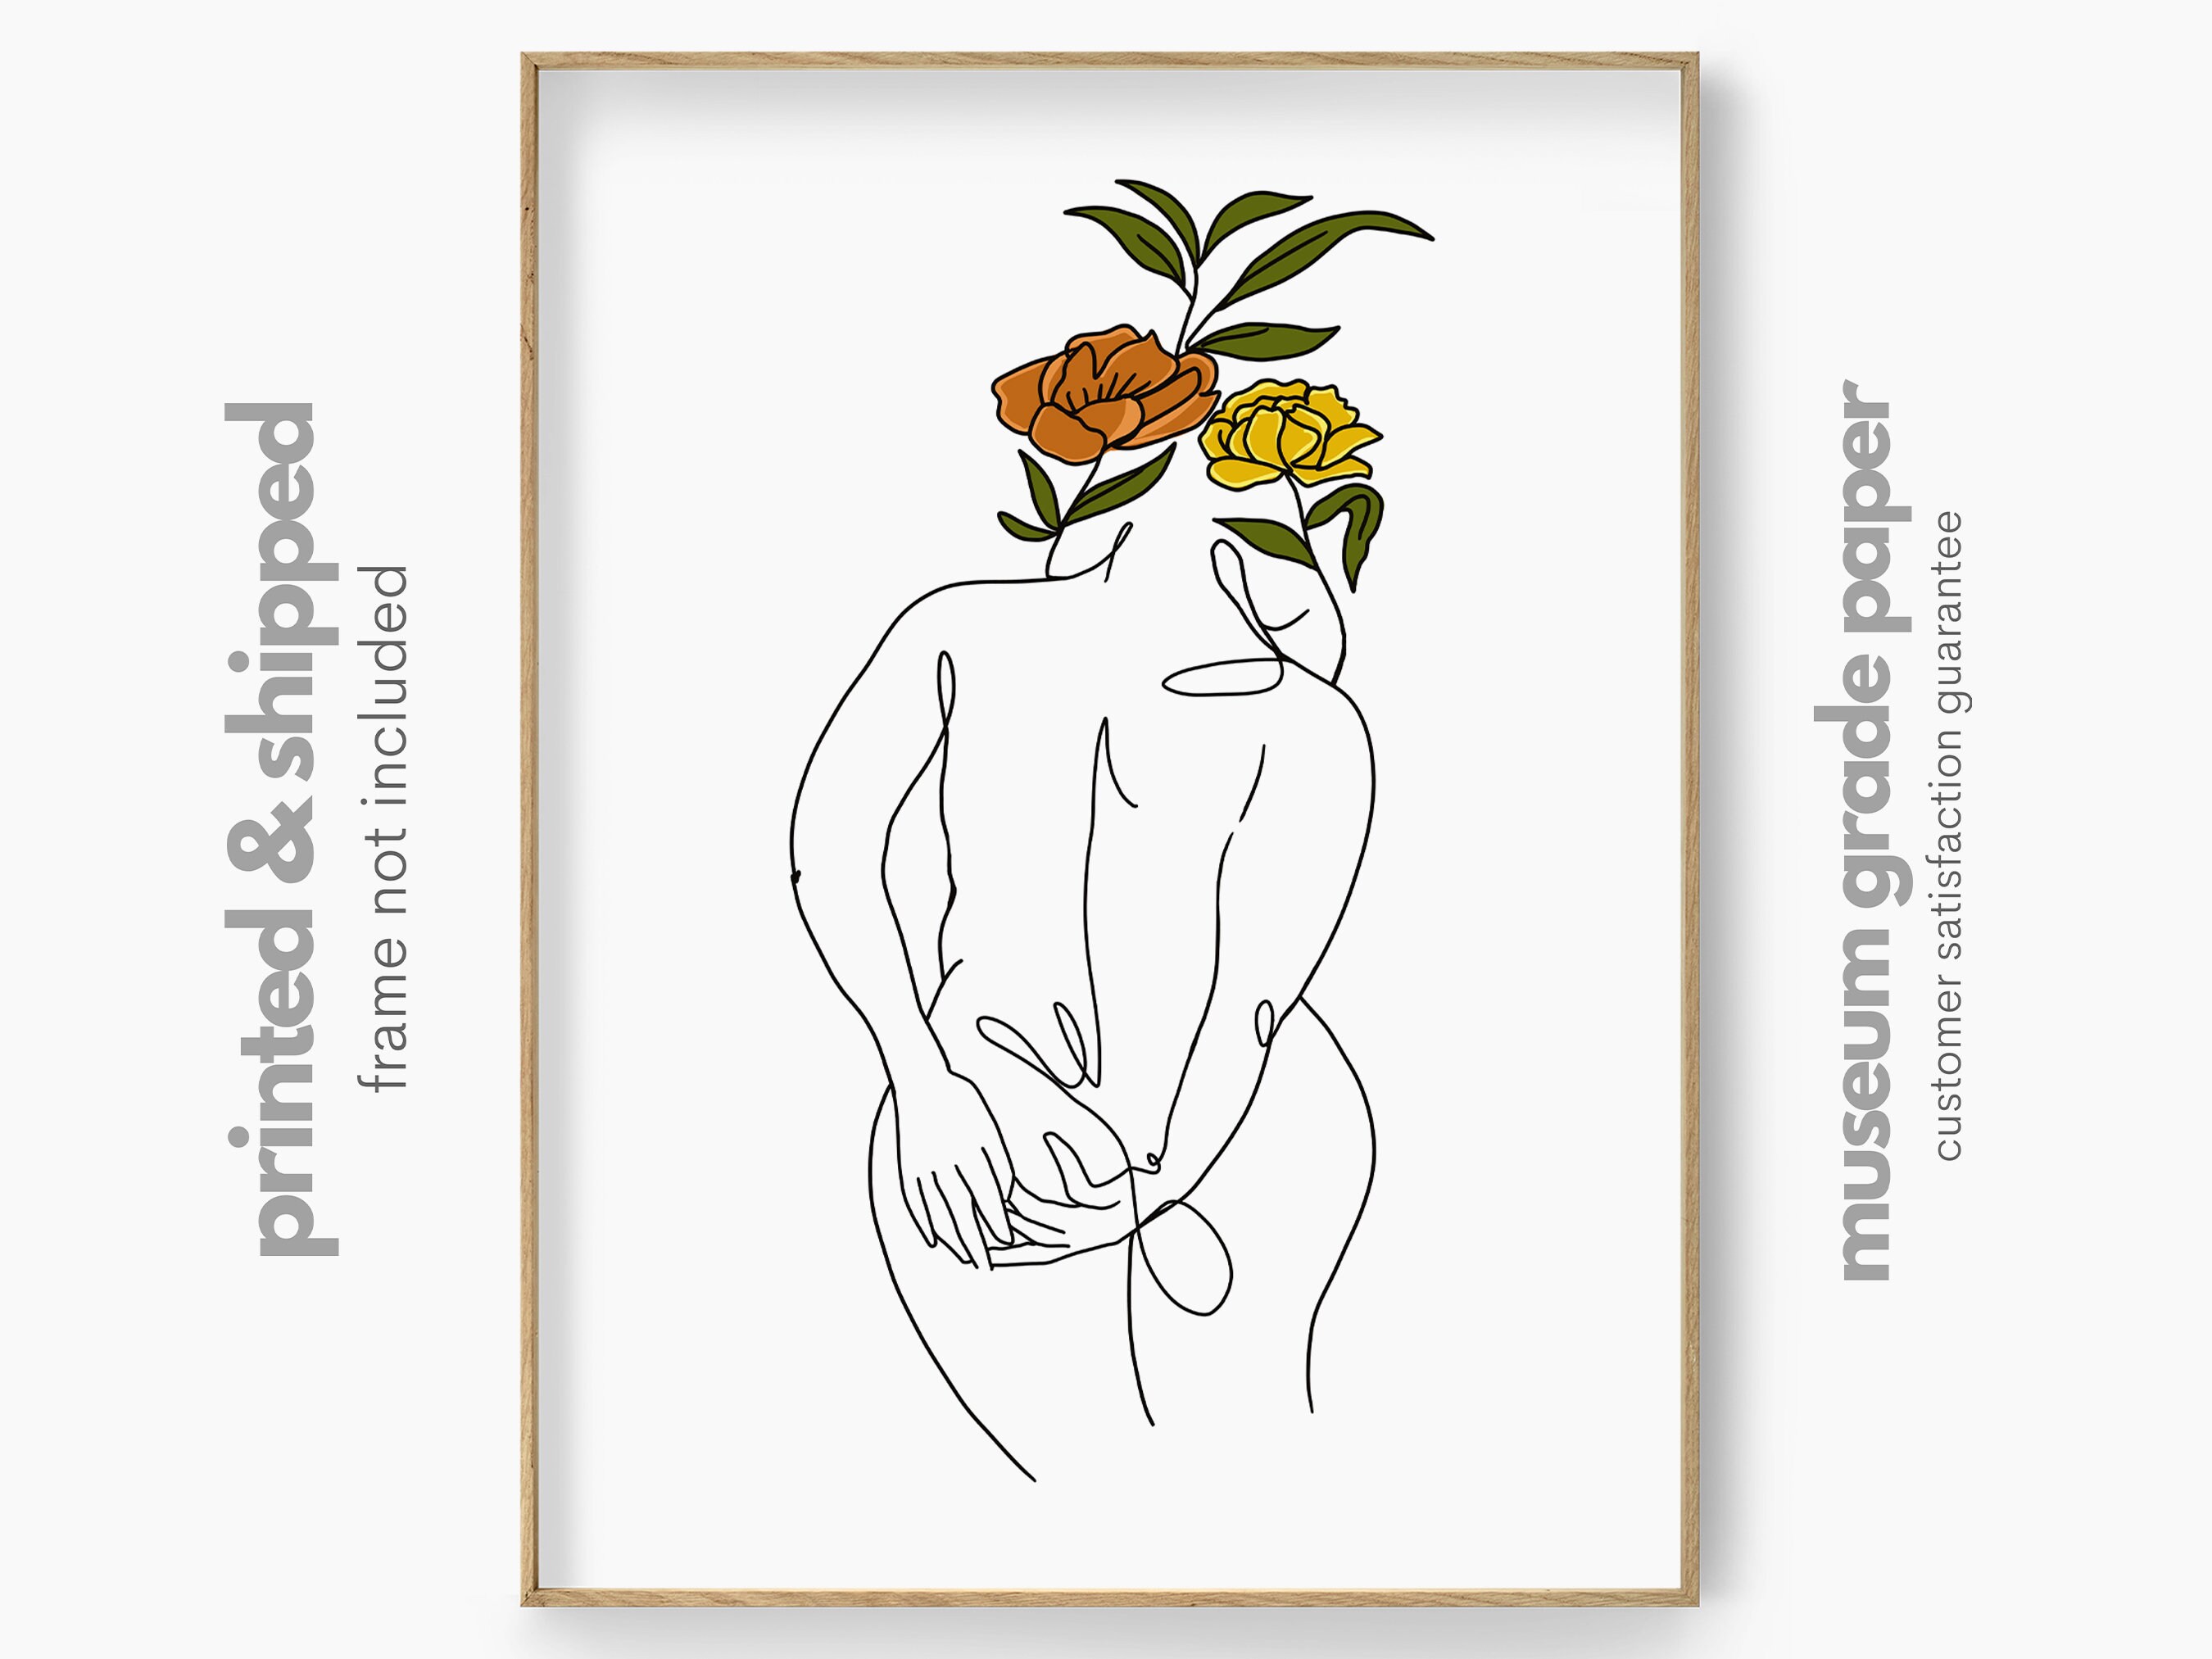 Detail Human Back Body Parts Pencil Stock Illustration 162857753   Shutterstock